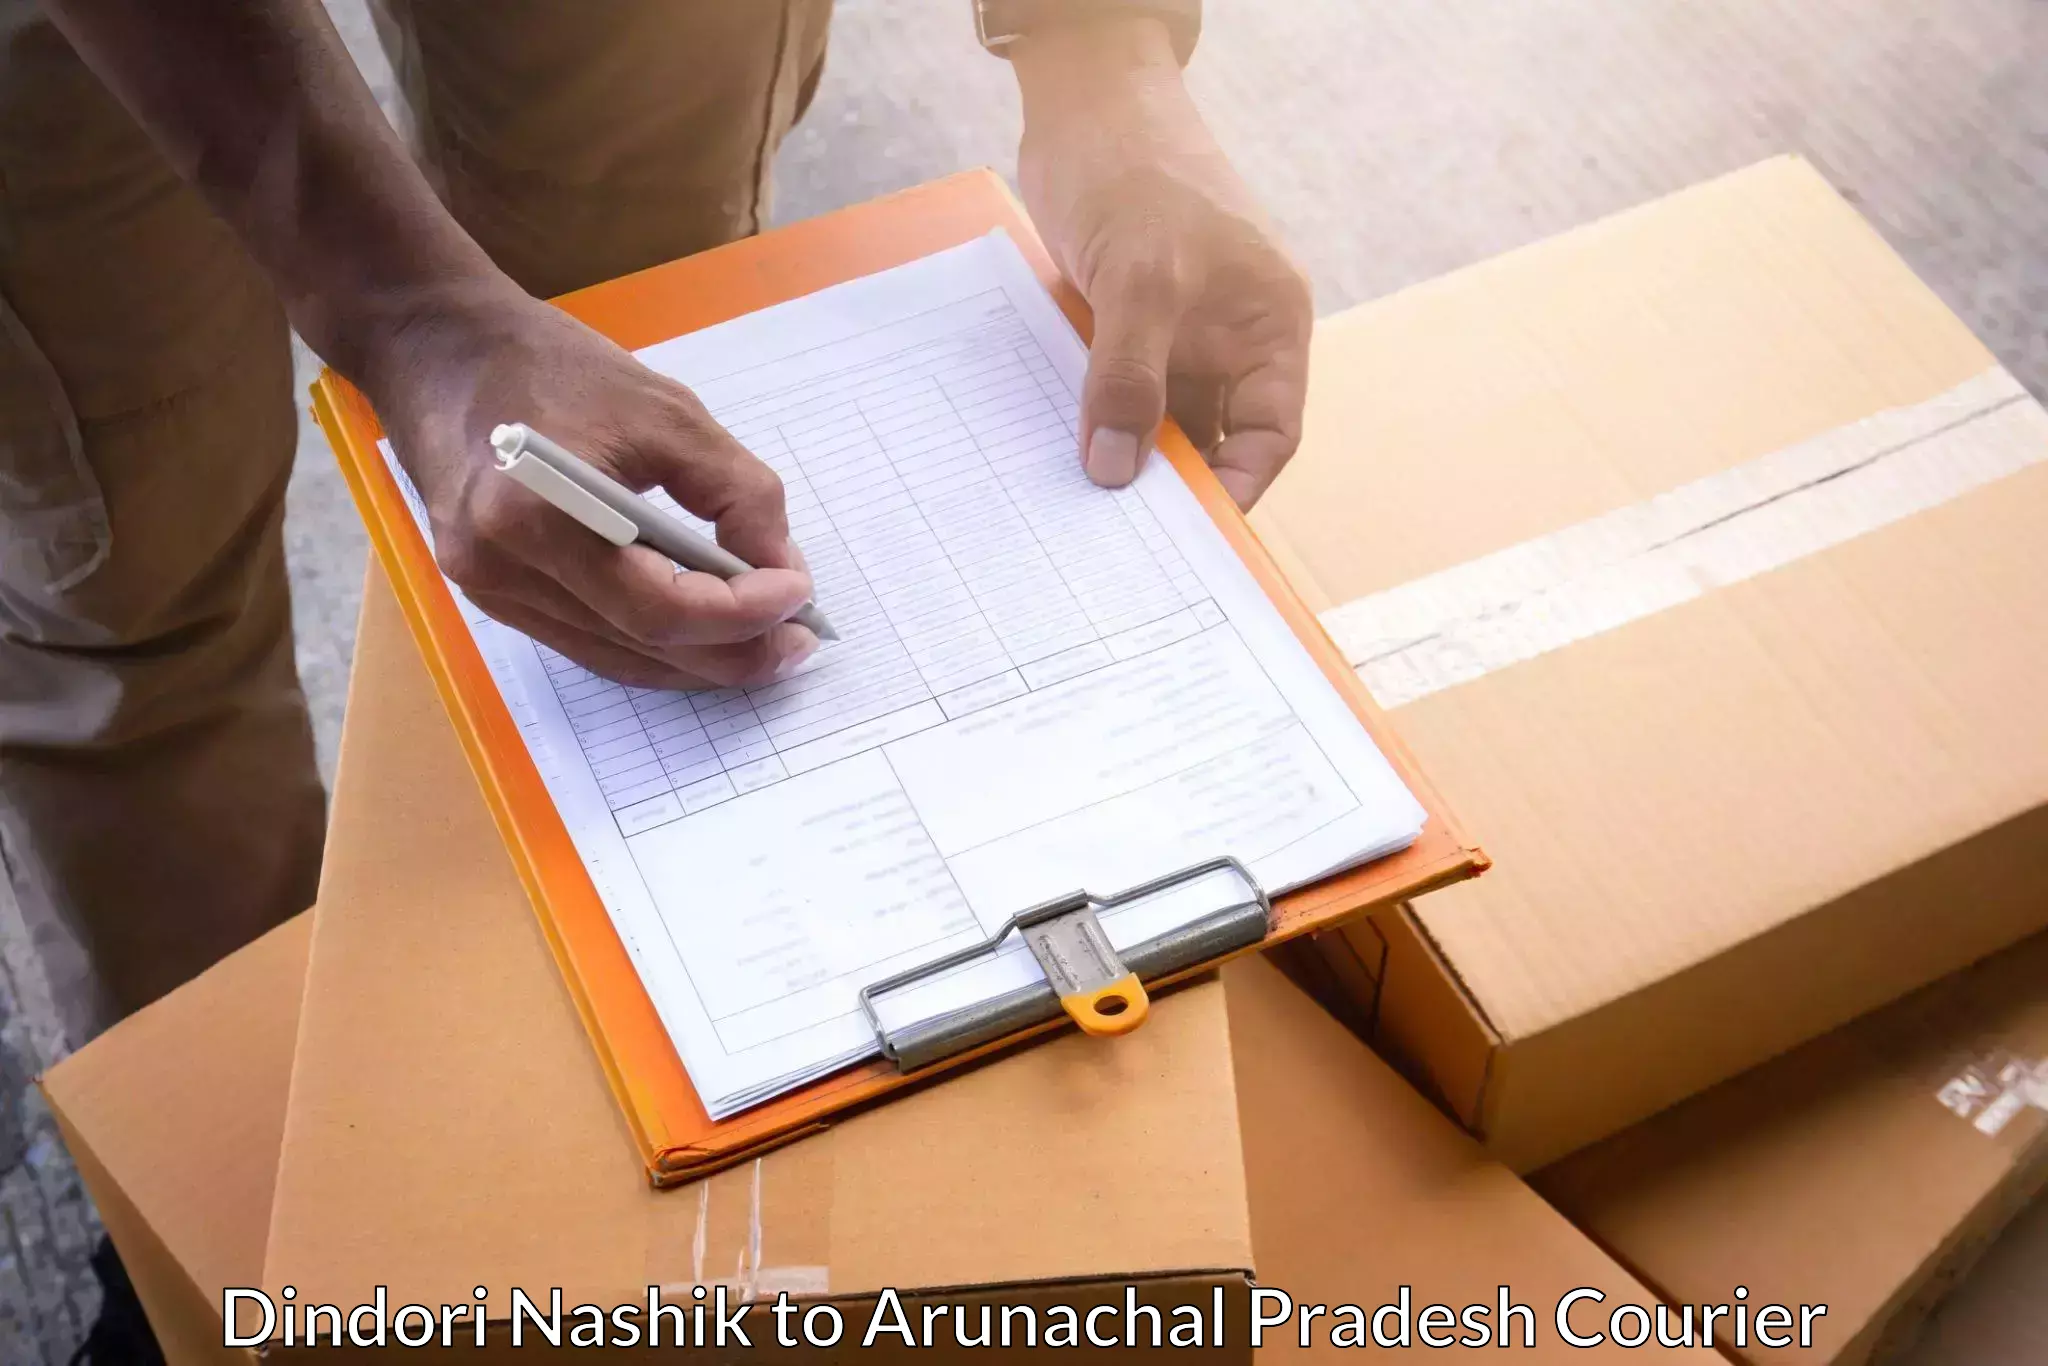 Urgent courier needs Dindori Nashik to Arunachal Pradesh